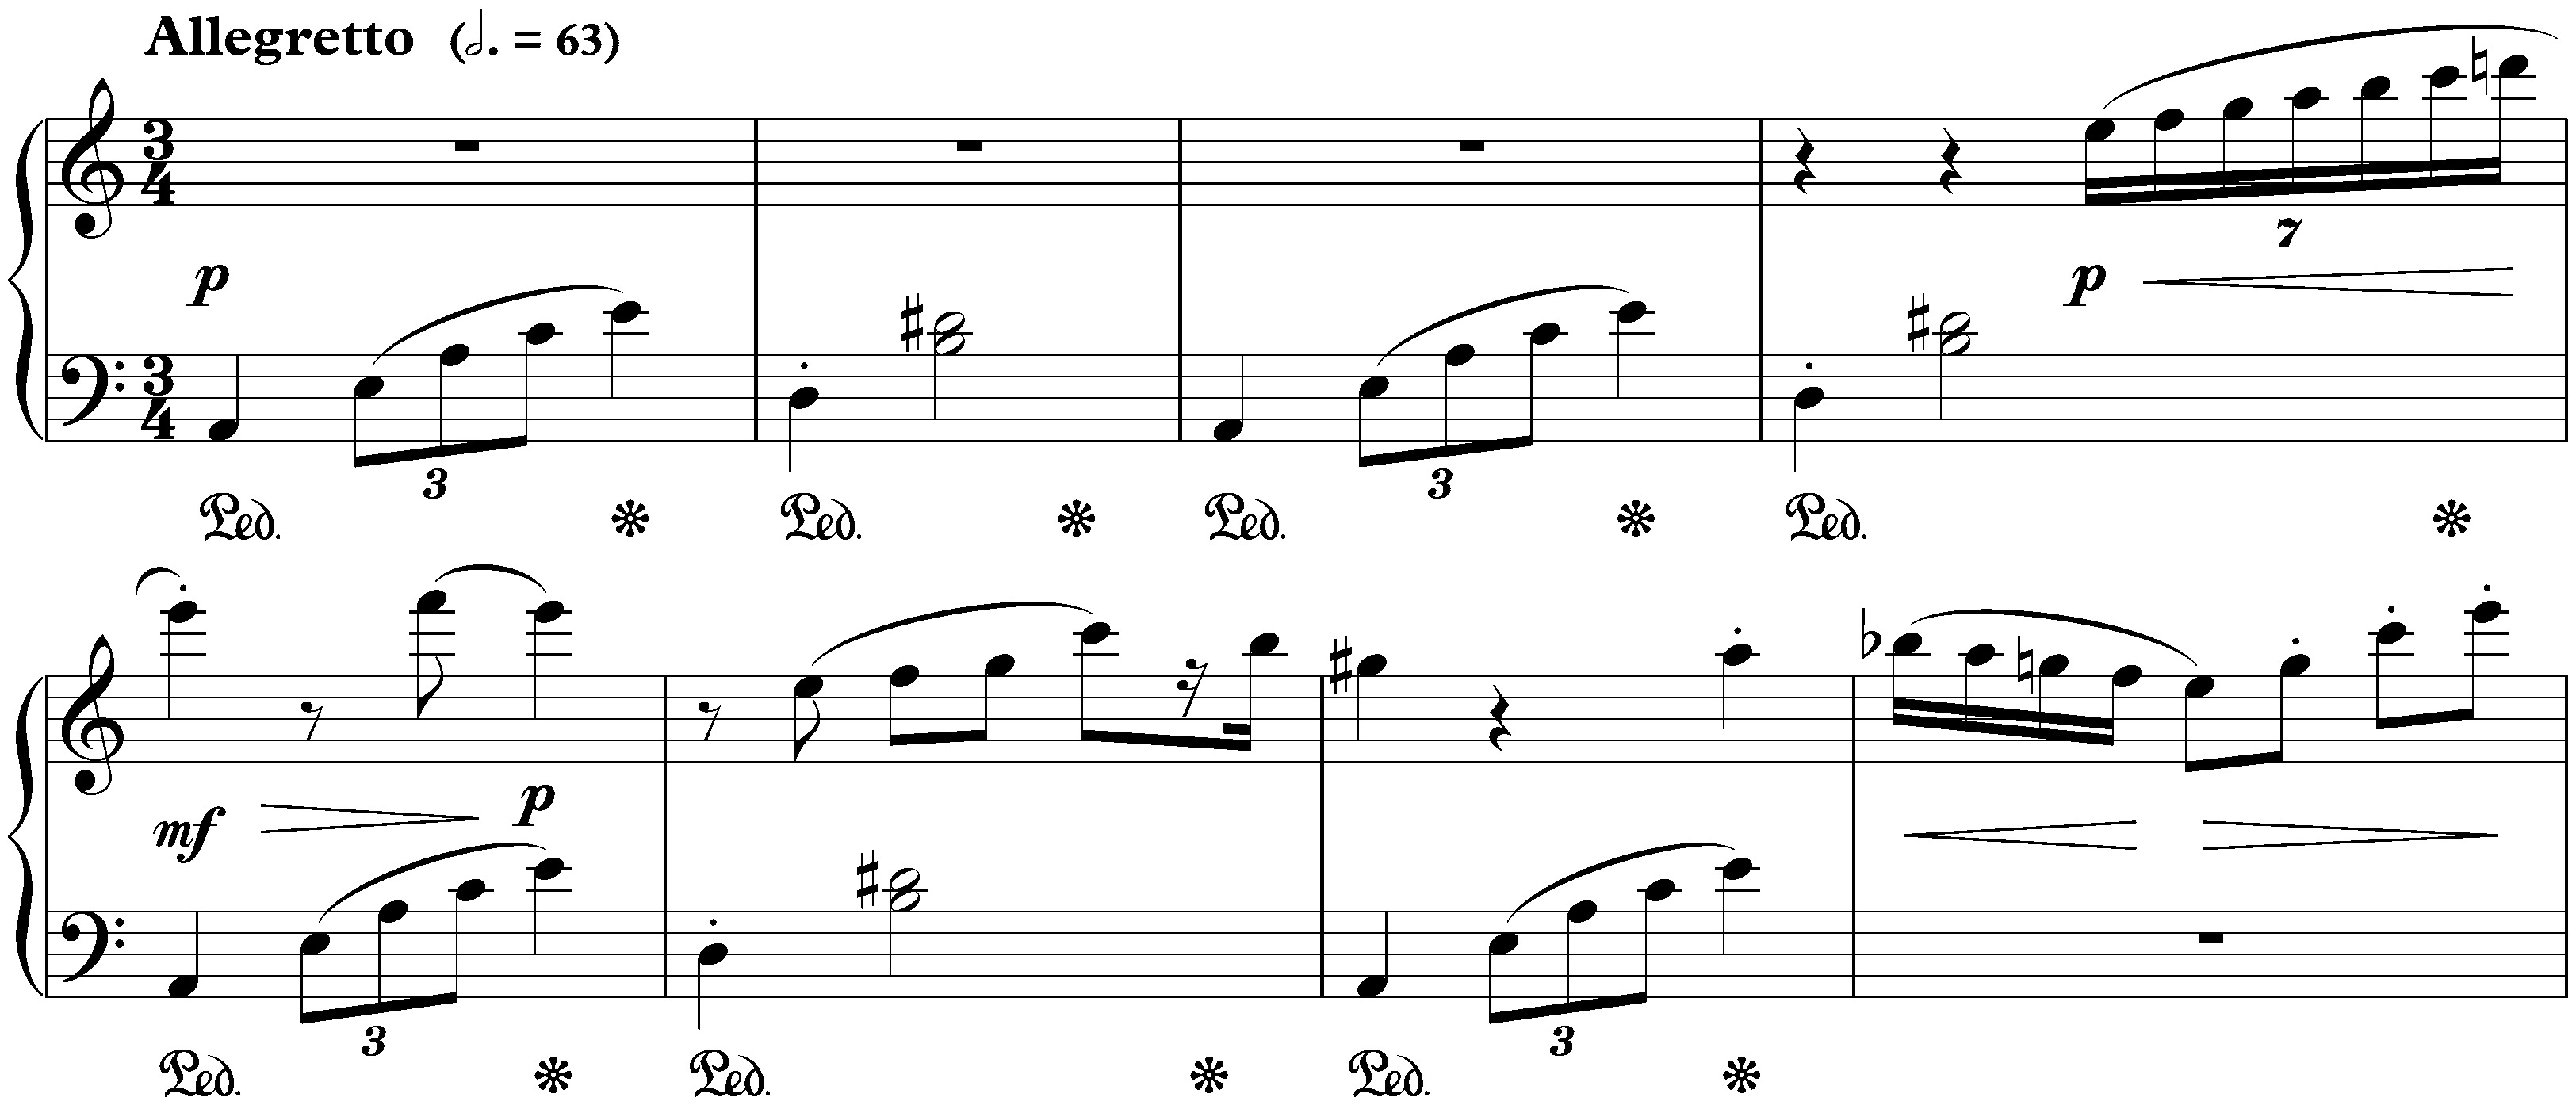 Twenty-four Preludes, op. 34; 2. A minor